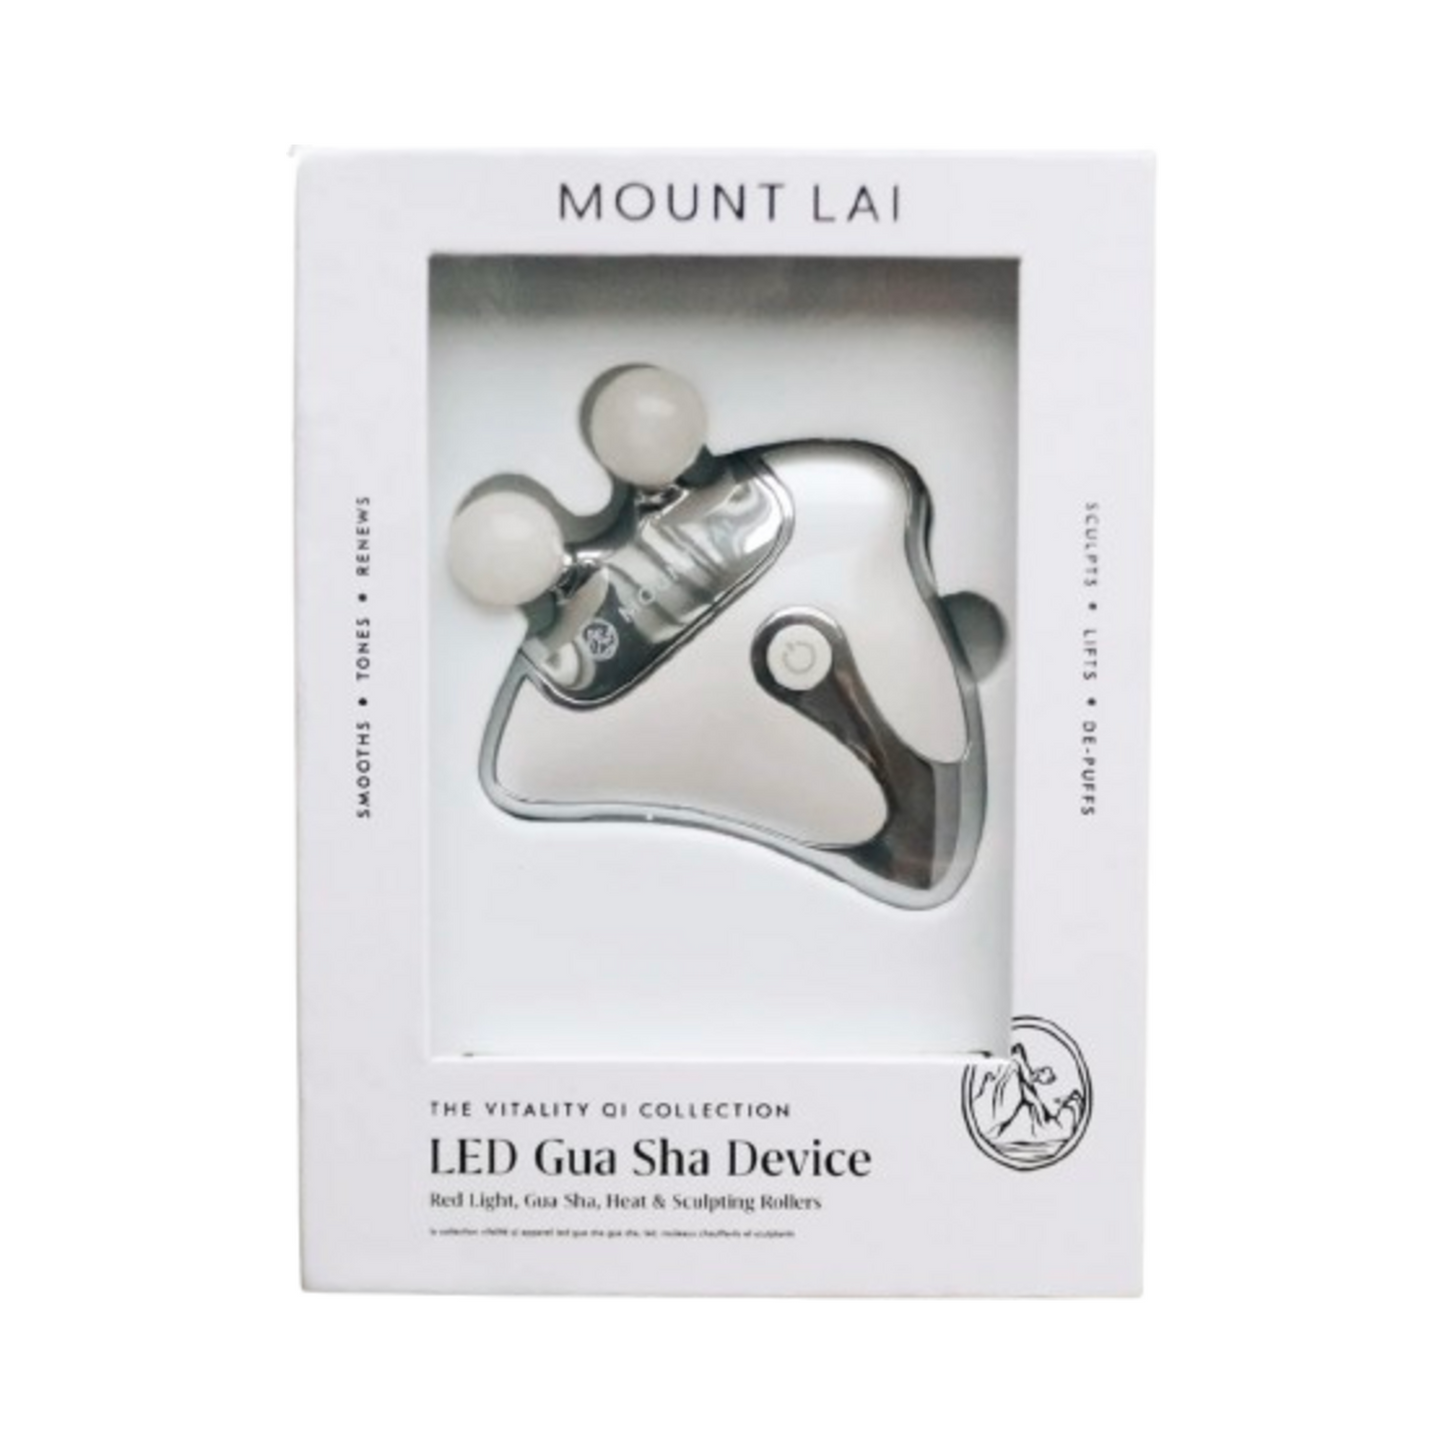 Mount Lai The Vitality Qi LED Gua Sha Appareil avec pochette de protection